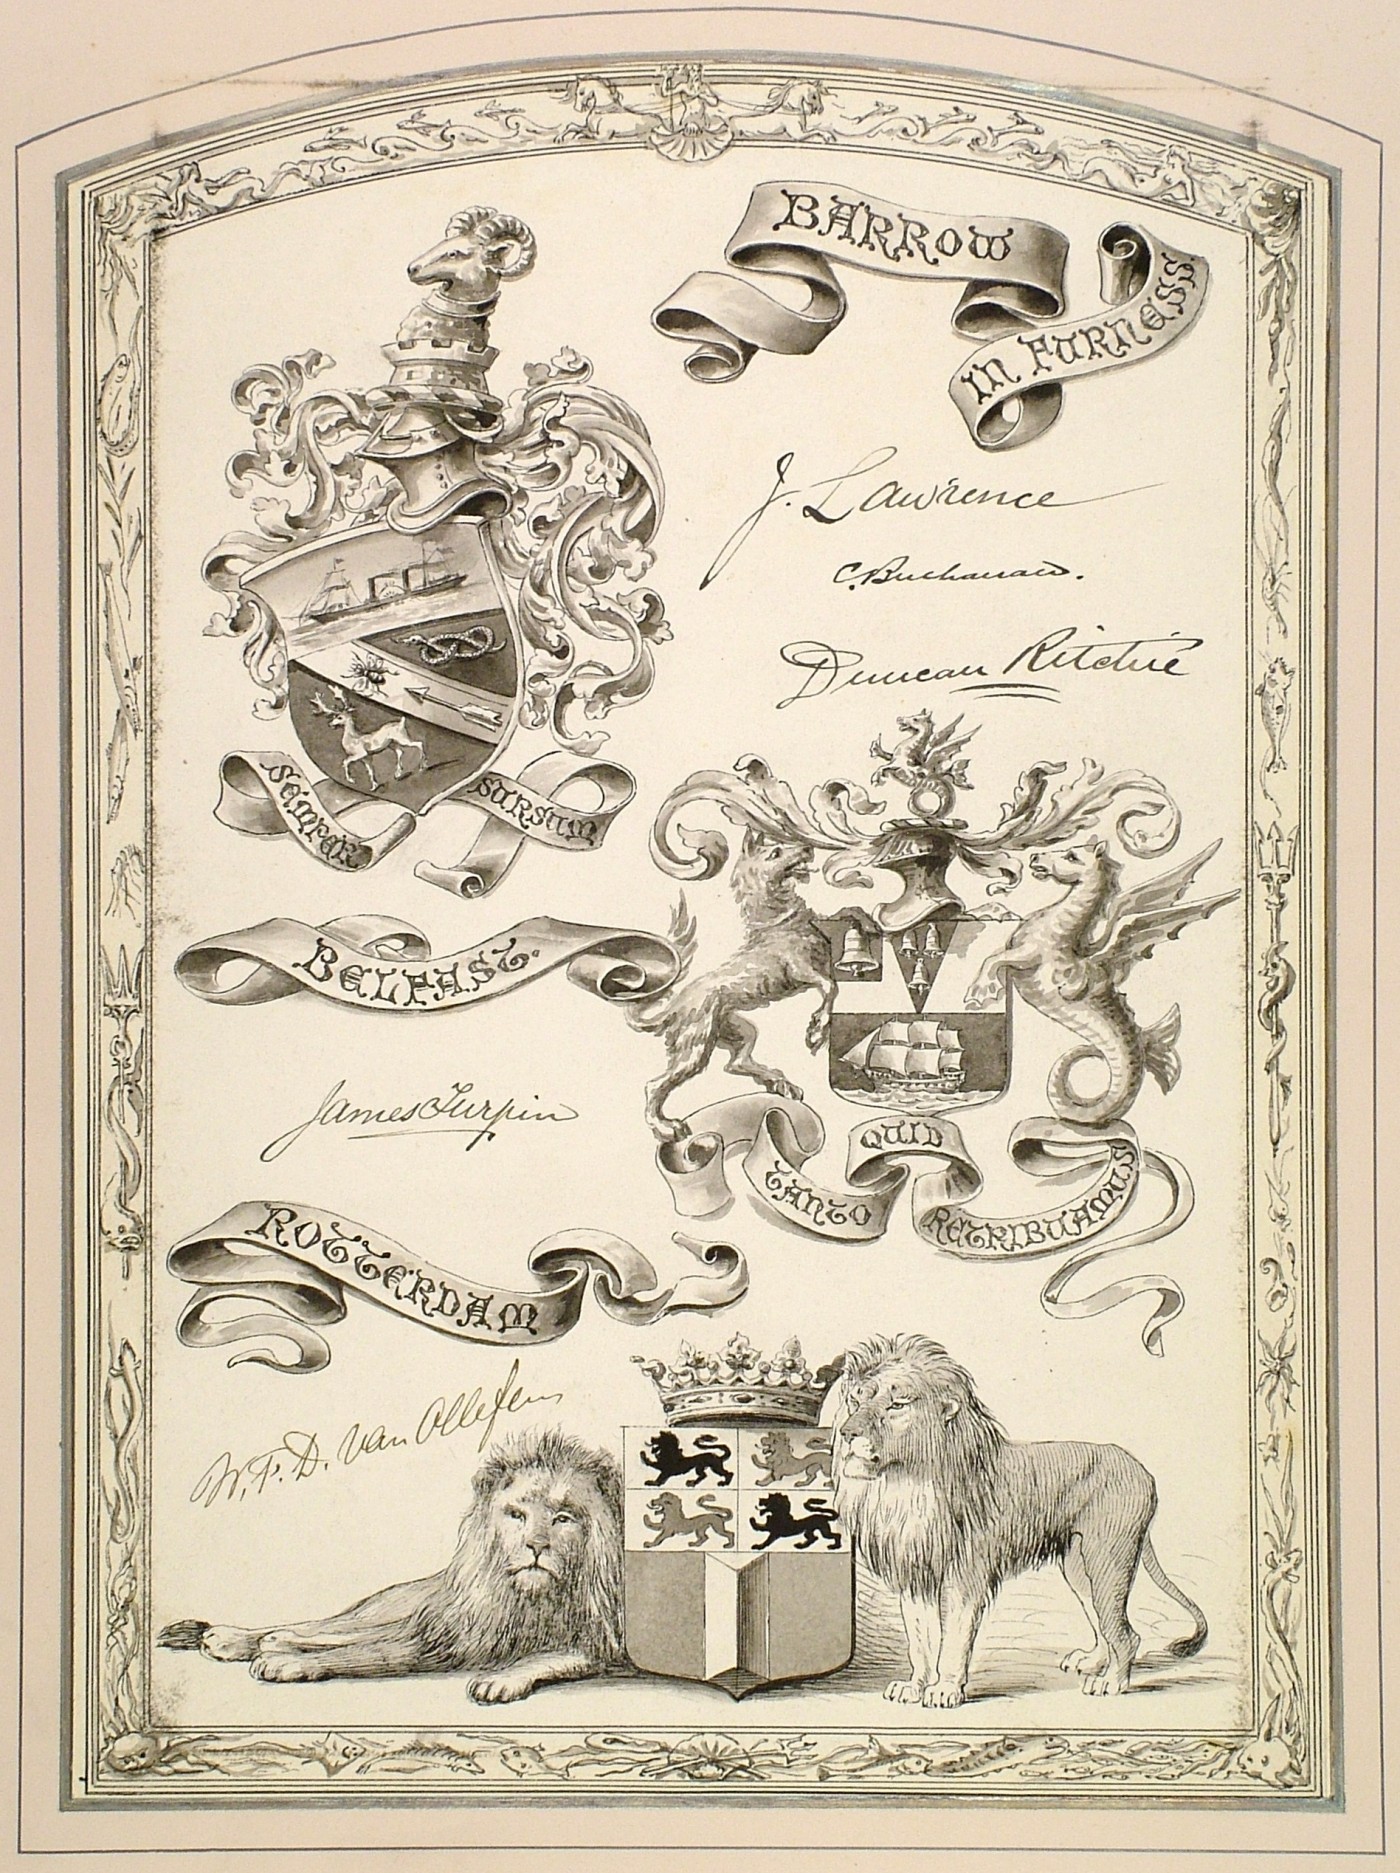 Waymouth presentation, Barrow & Rotterdam Coat of Arms